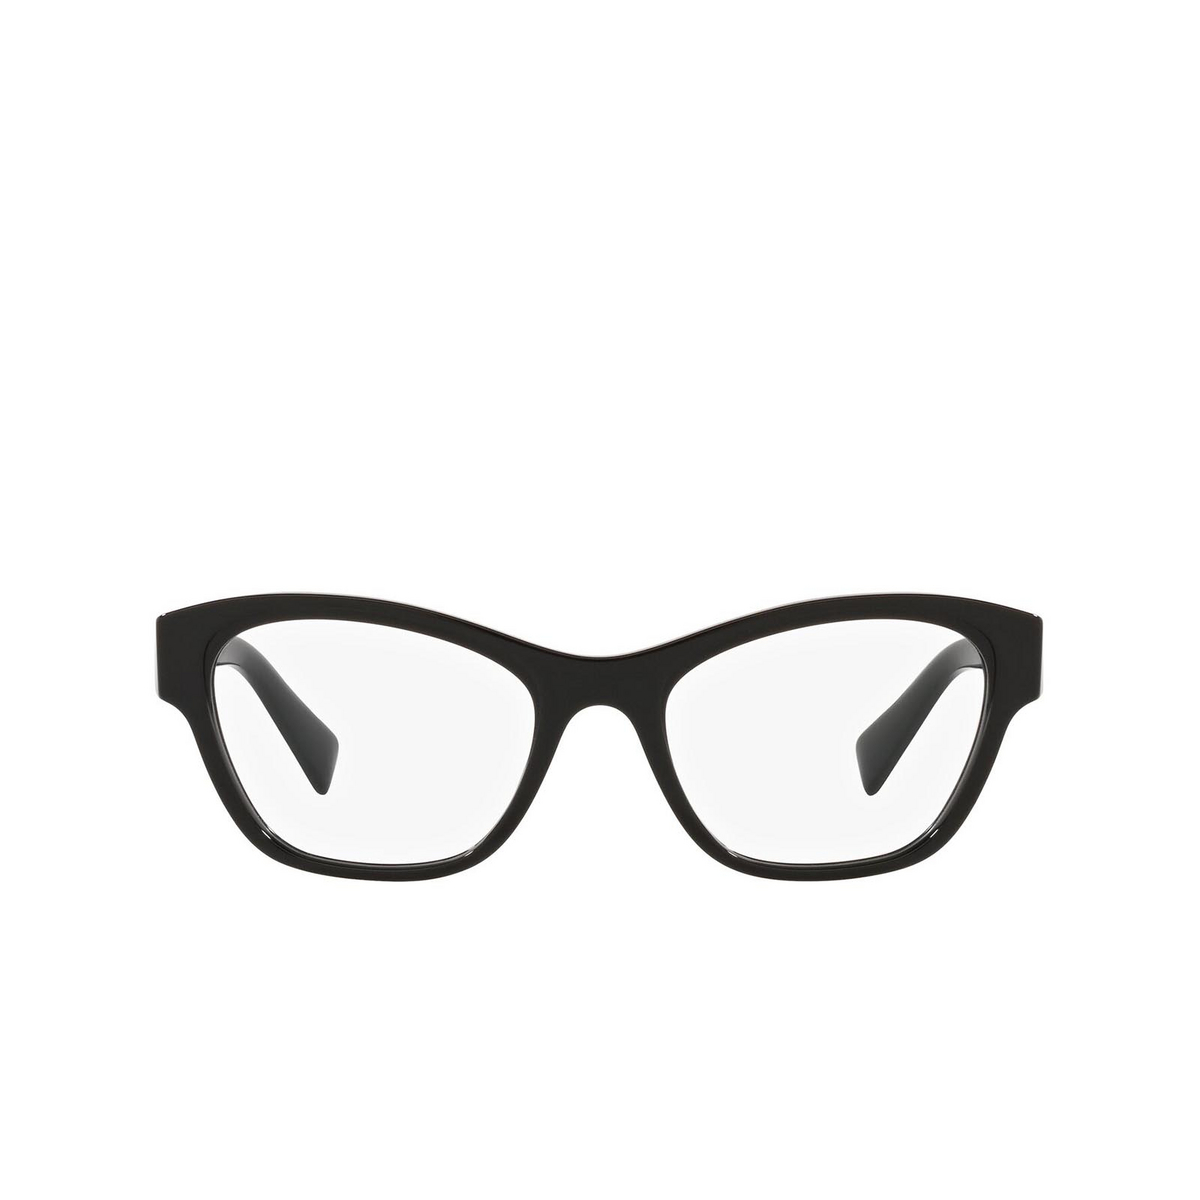 Miu Miu® Irregular Eyeglasses: MU 08TV color Black 1AB1O1 - front view.